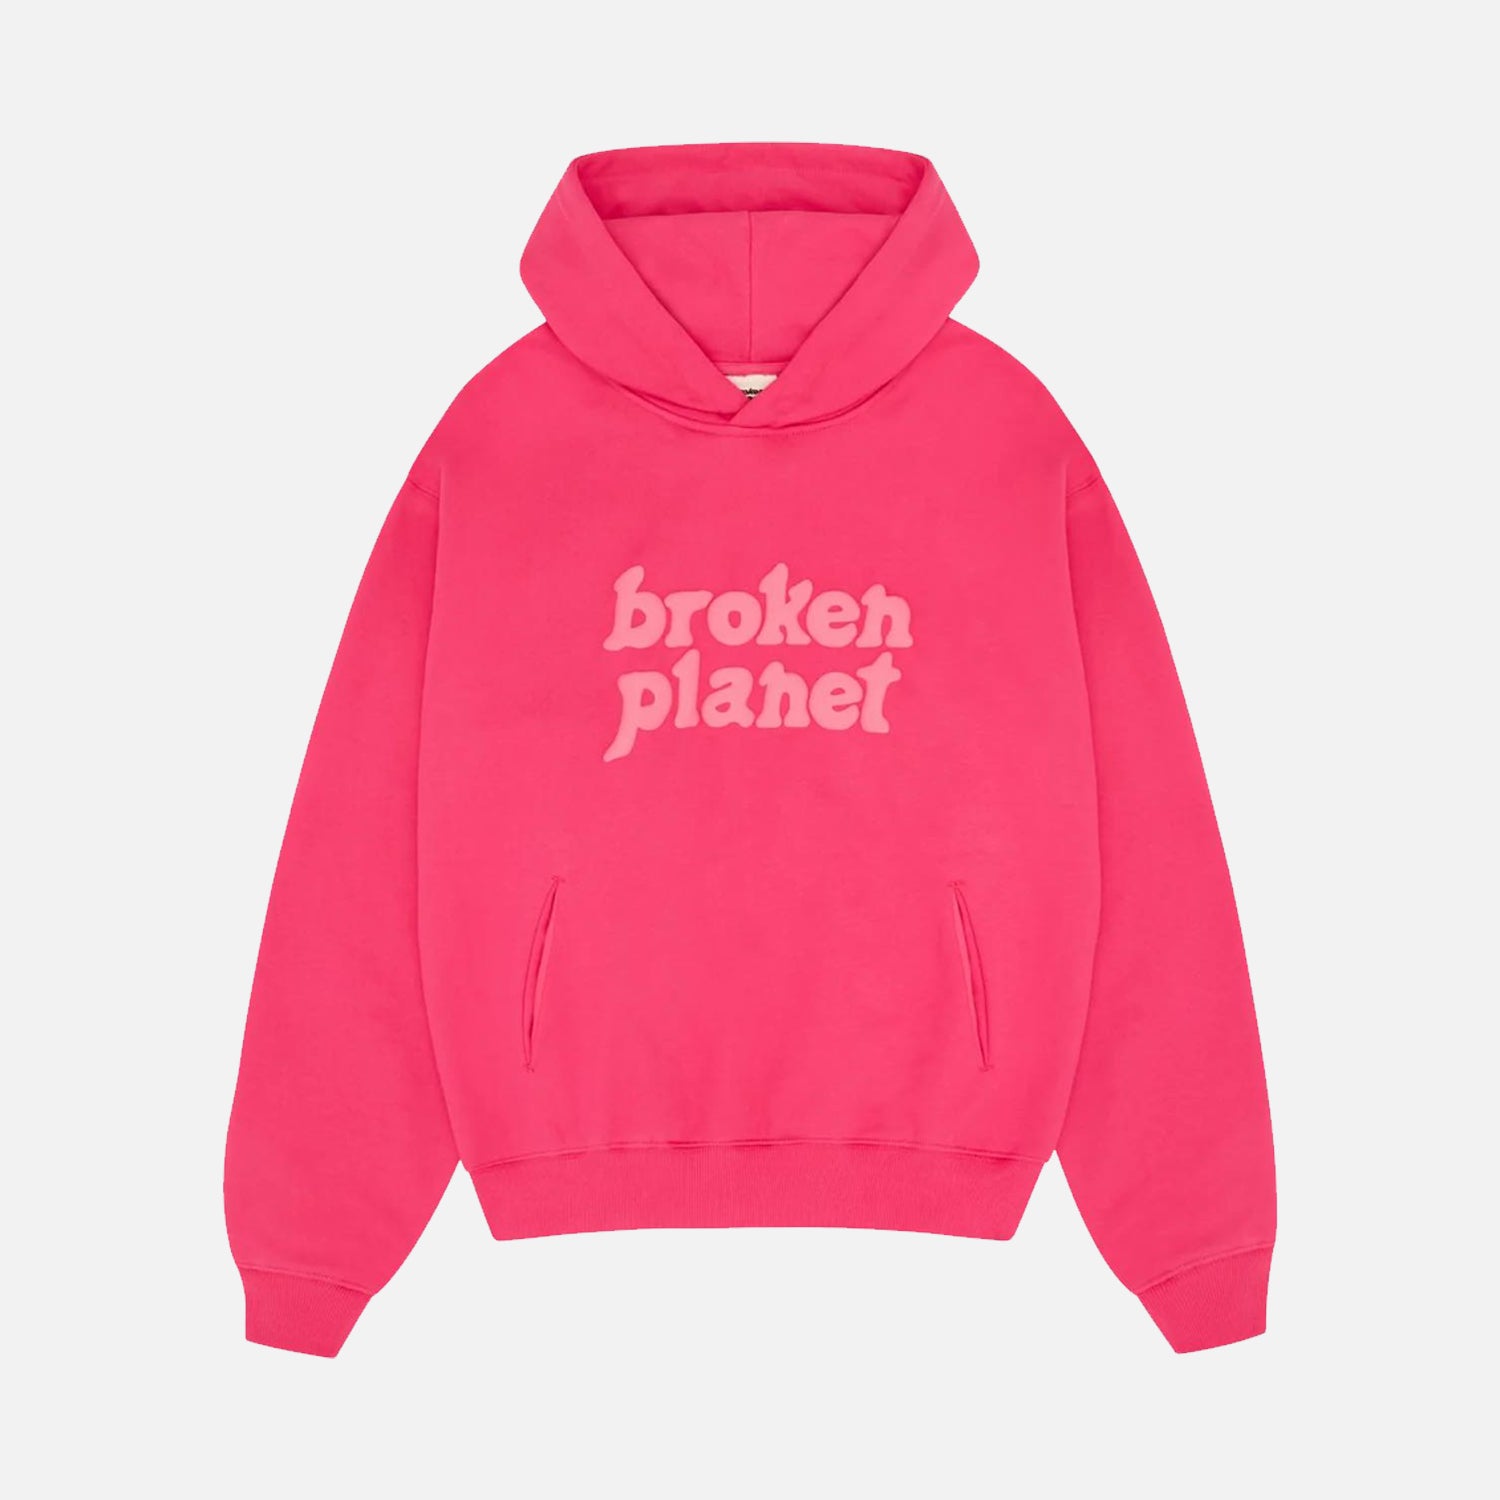 Broken Planet Market Monochrome Hoodie - Fuchshia Pink